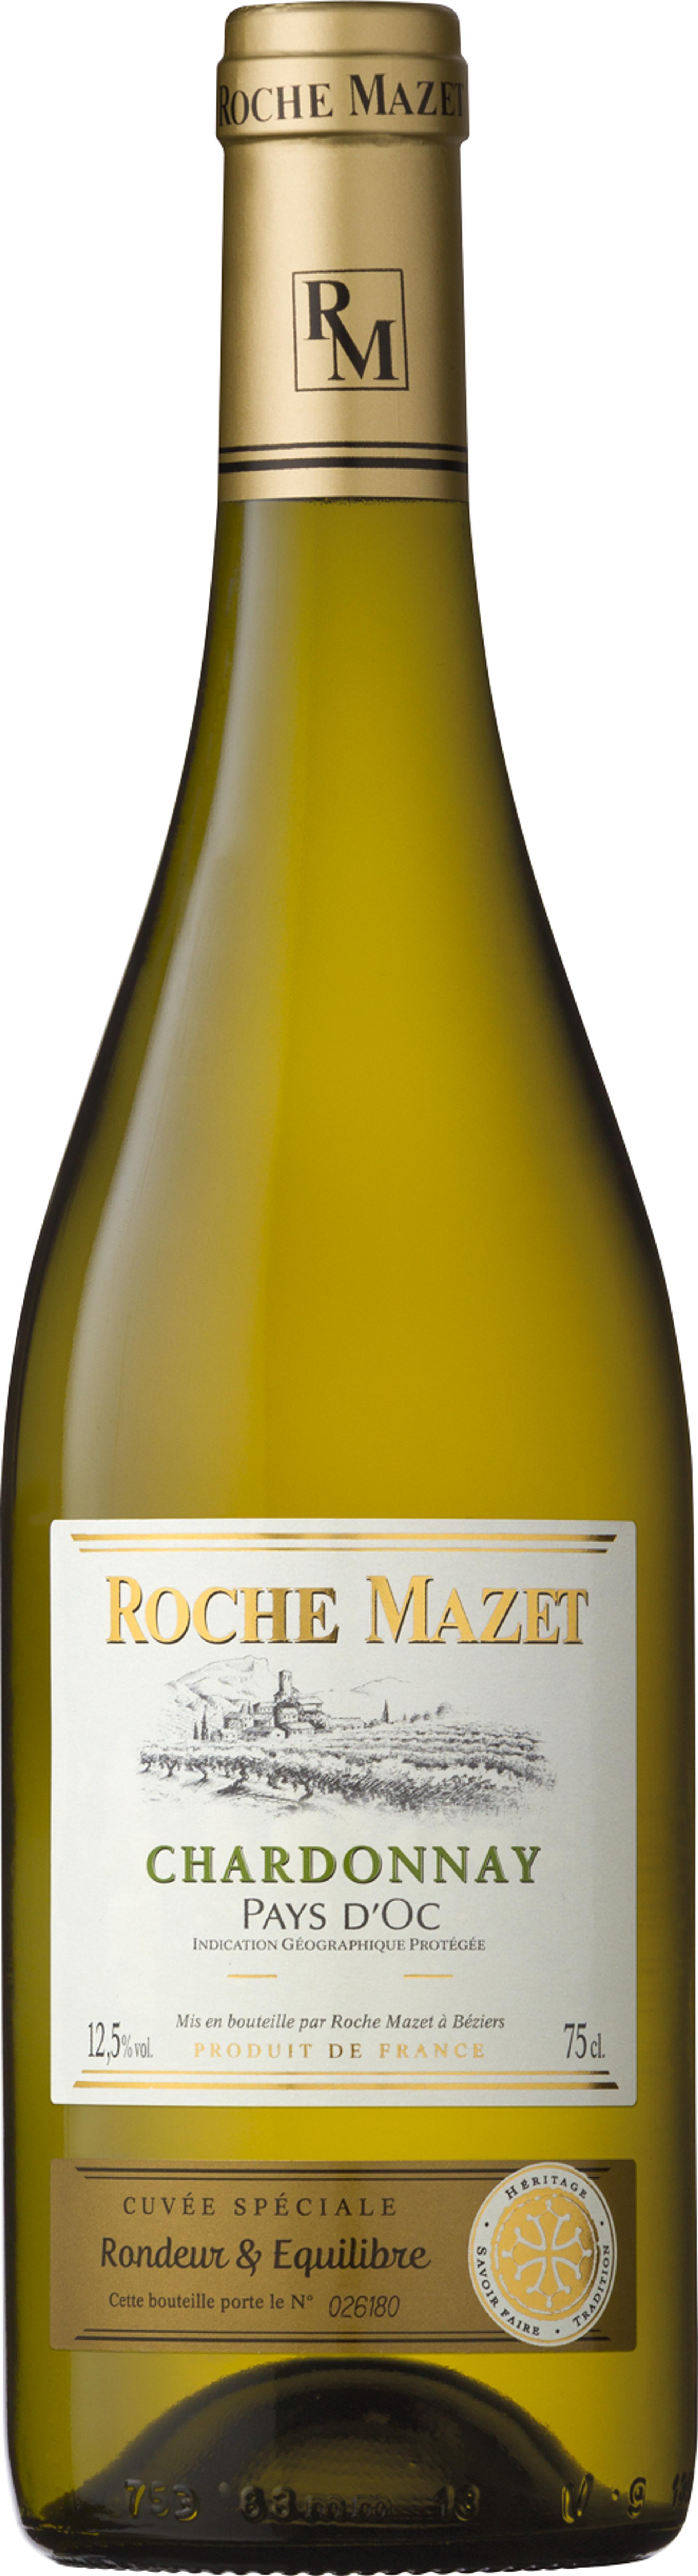 Roche Mazet Chardonnay